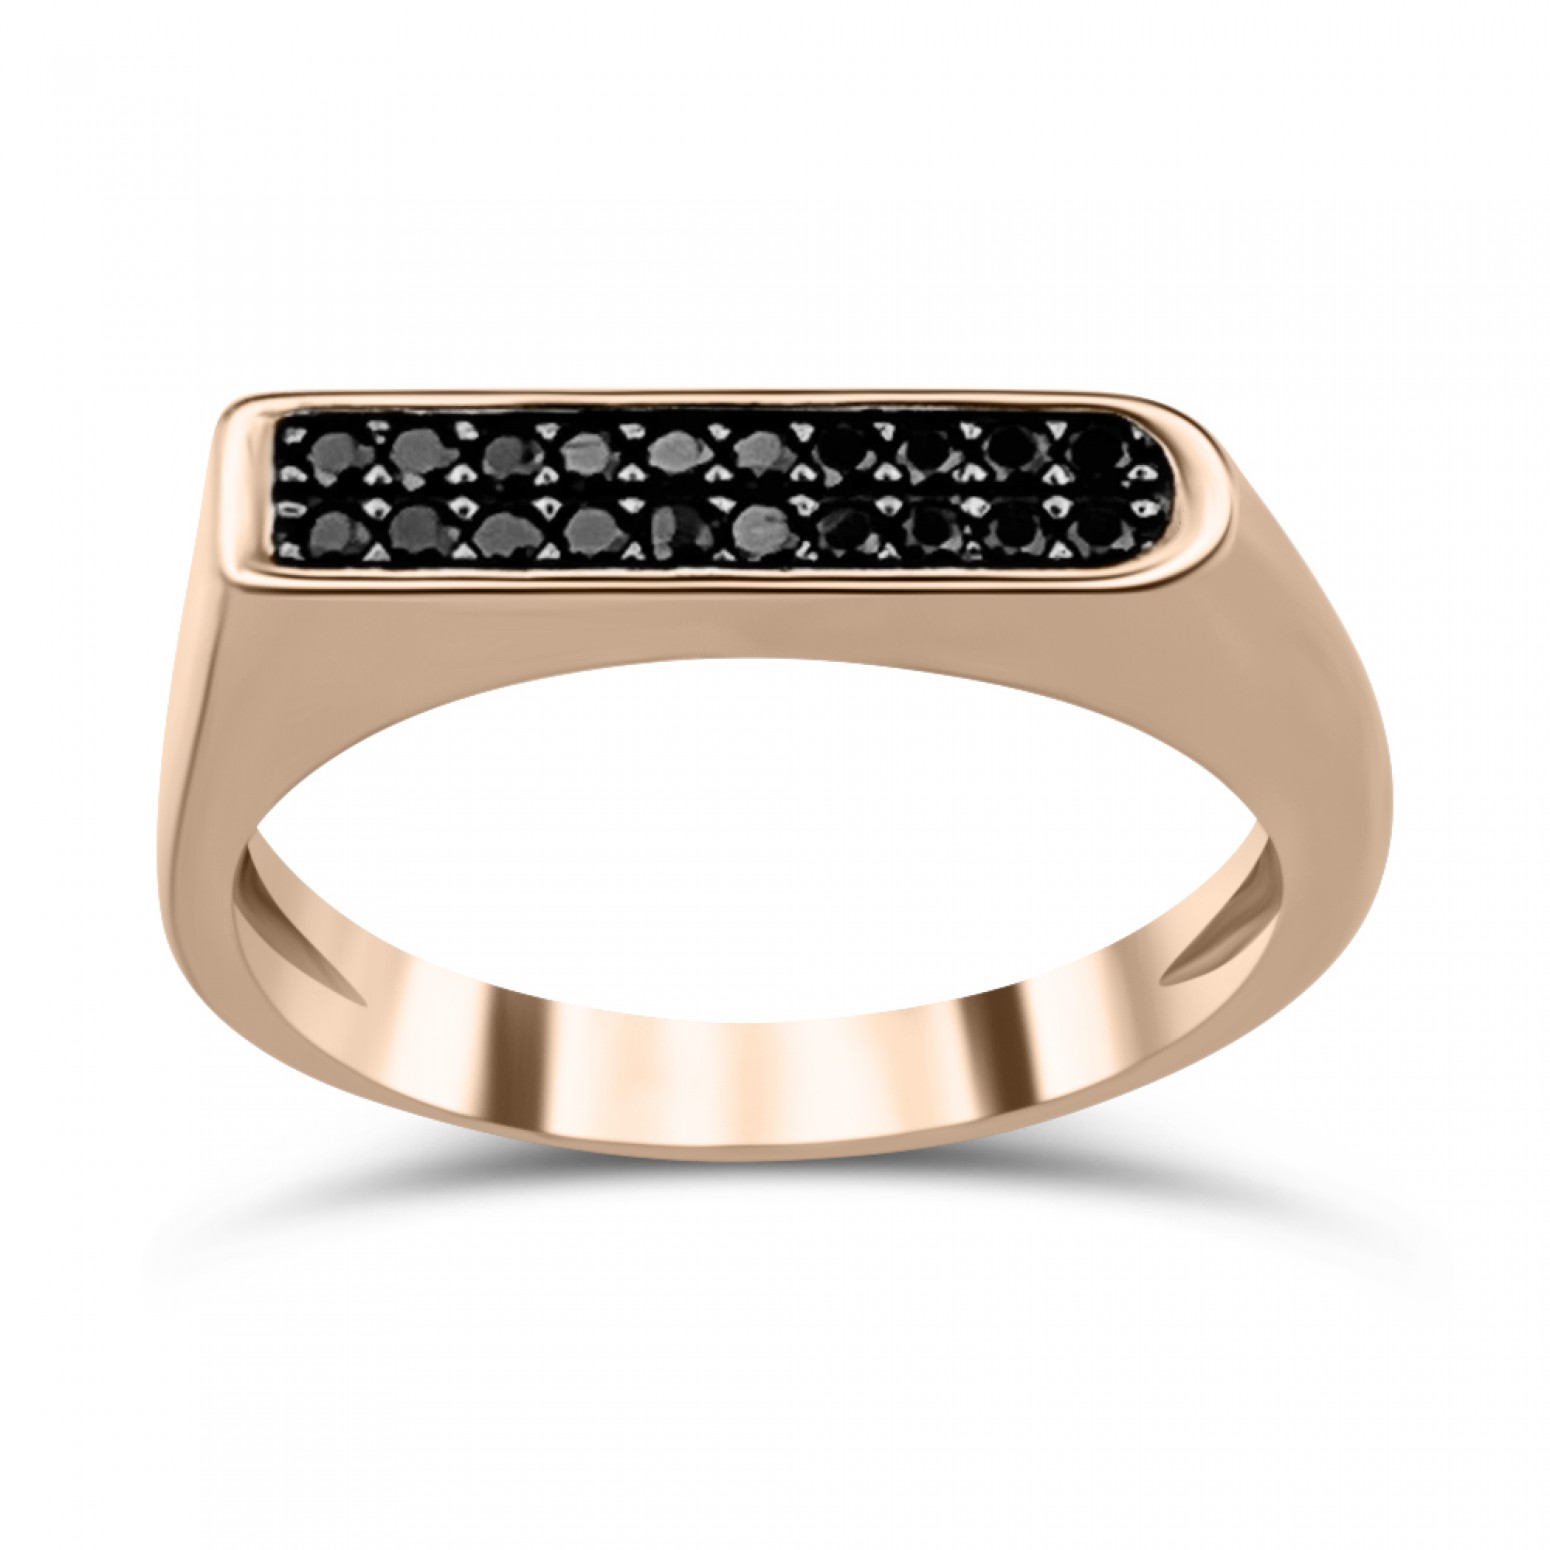 Multistone ring K9 pink gold with black zircon, da3249 RINGS Κοσμηματα - chrilia.gr